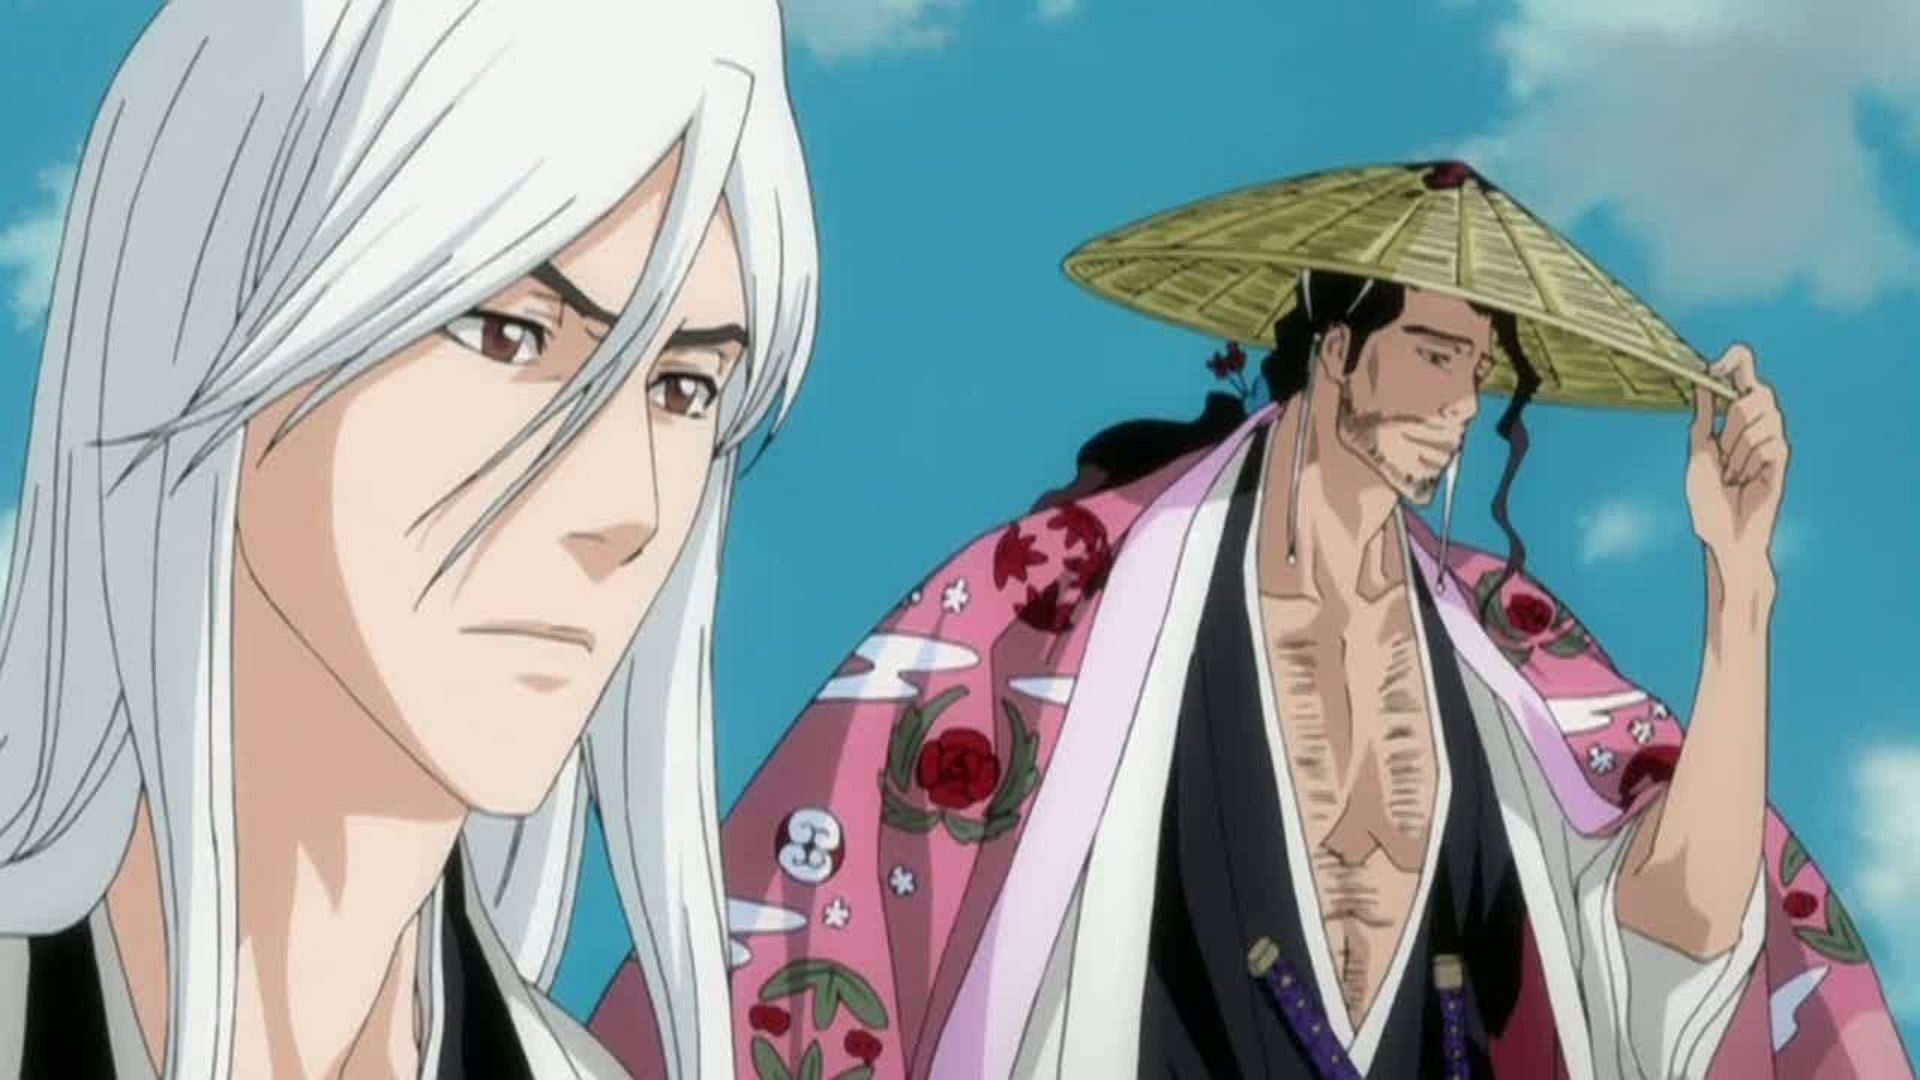 Ukitake and Kyoraku as shown in the Bleach anime series (Image via Studio Pierrot)